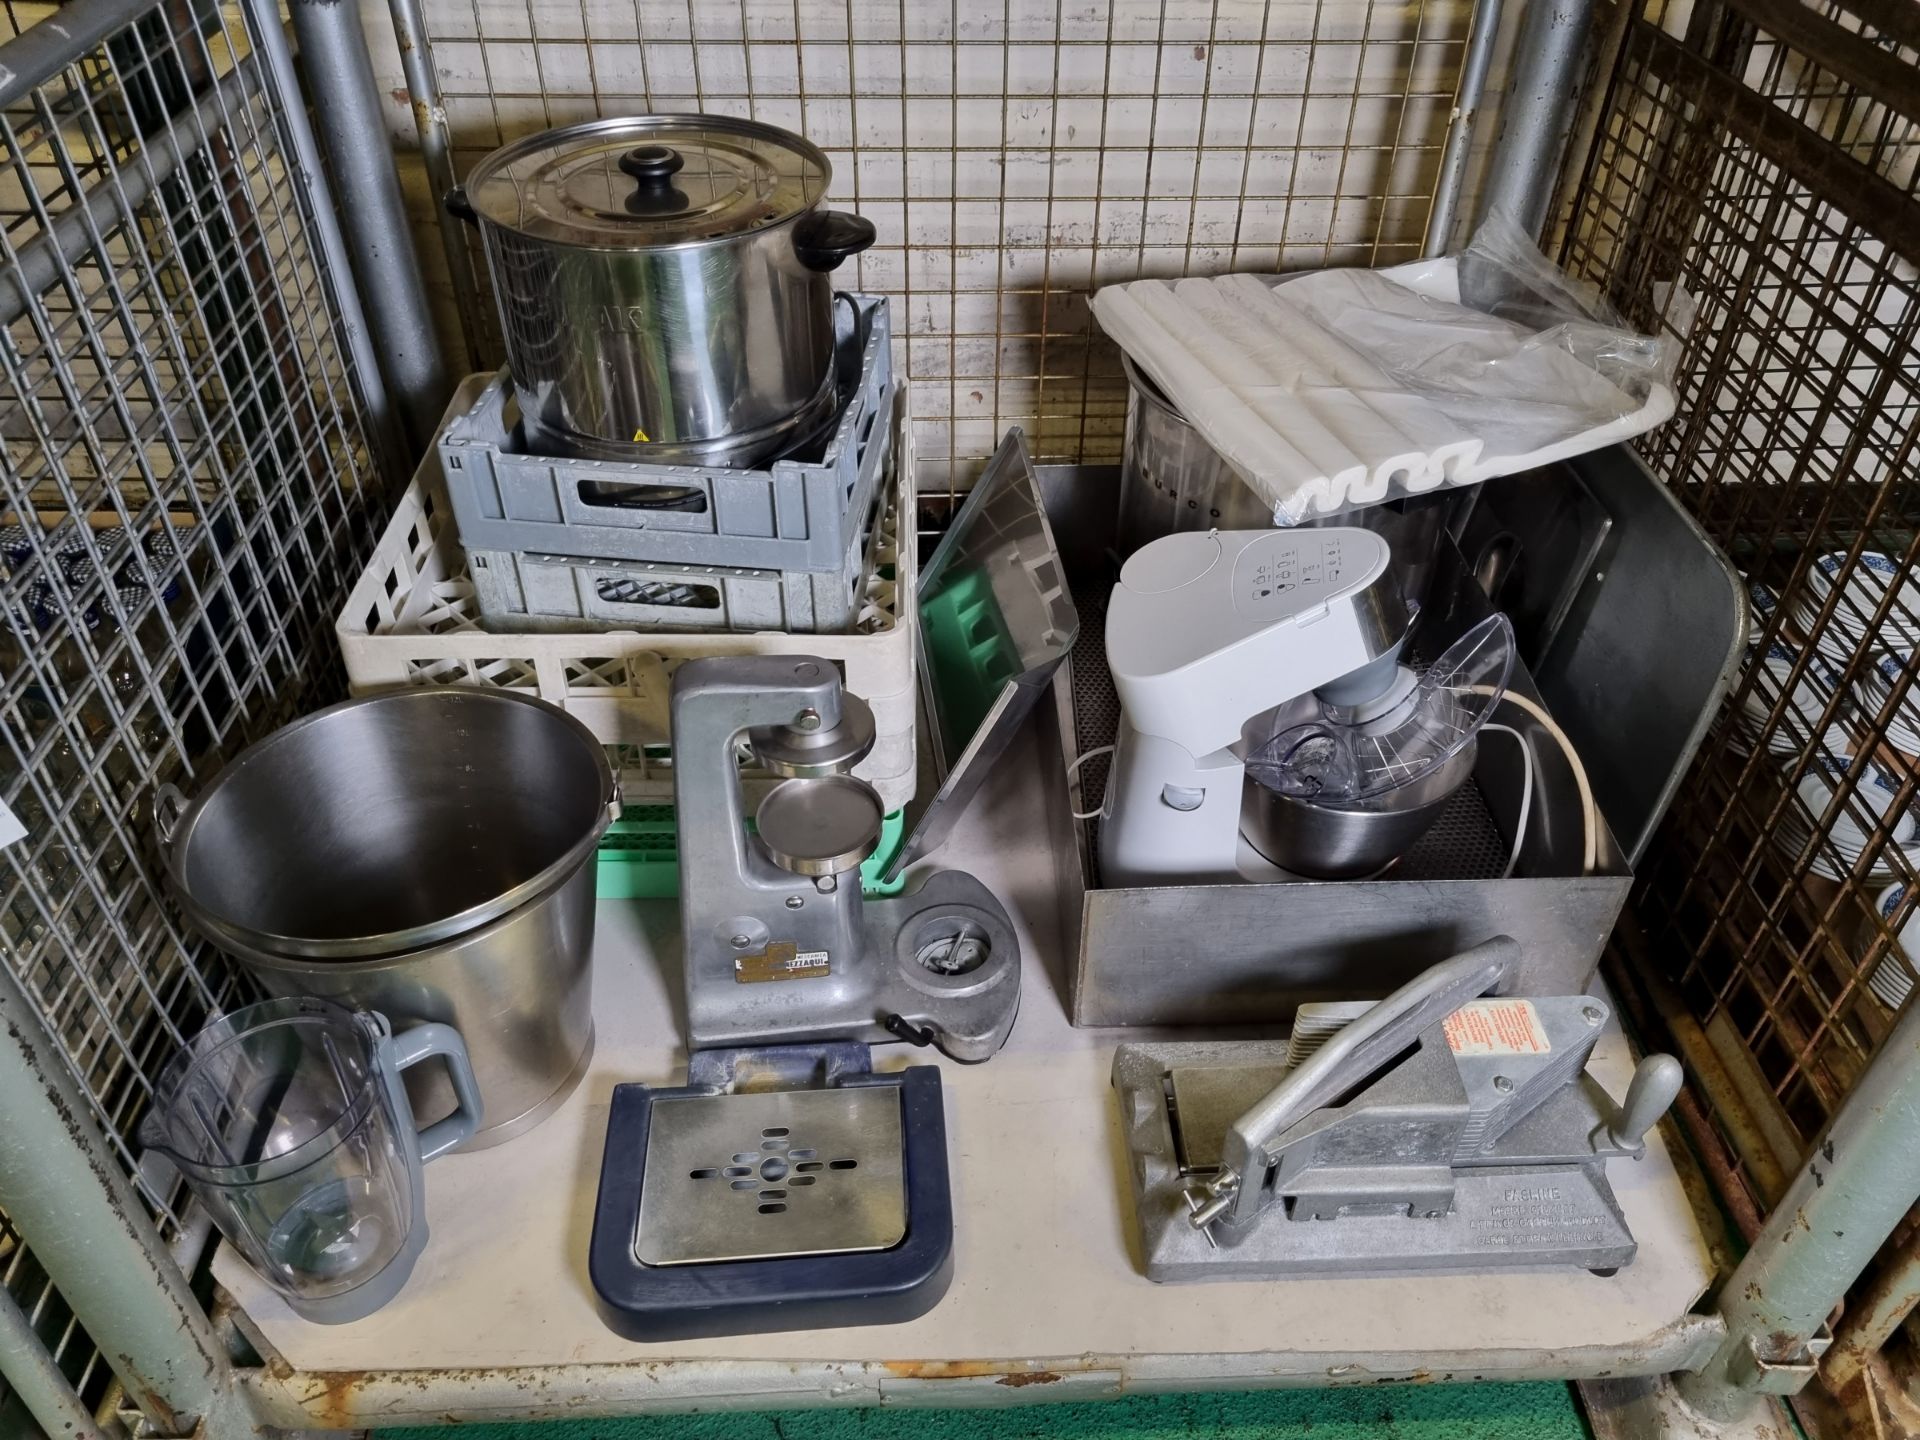 Catering equipment - dishwasher trays, food steamers, small mixer, tomato slicer, blender jug - Bild 2 aus 7